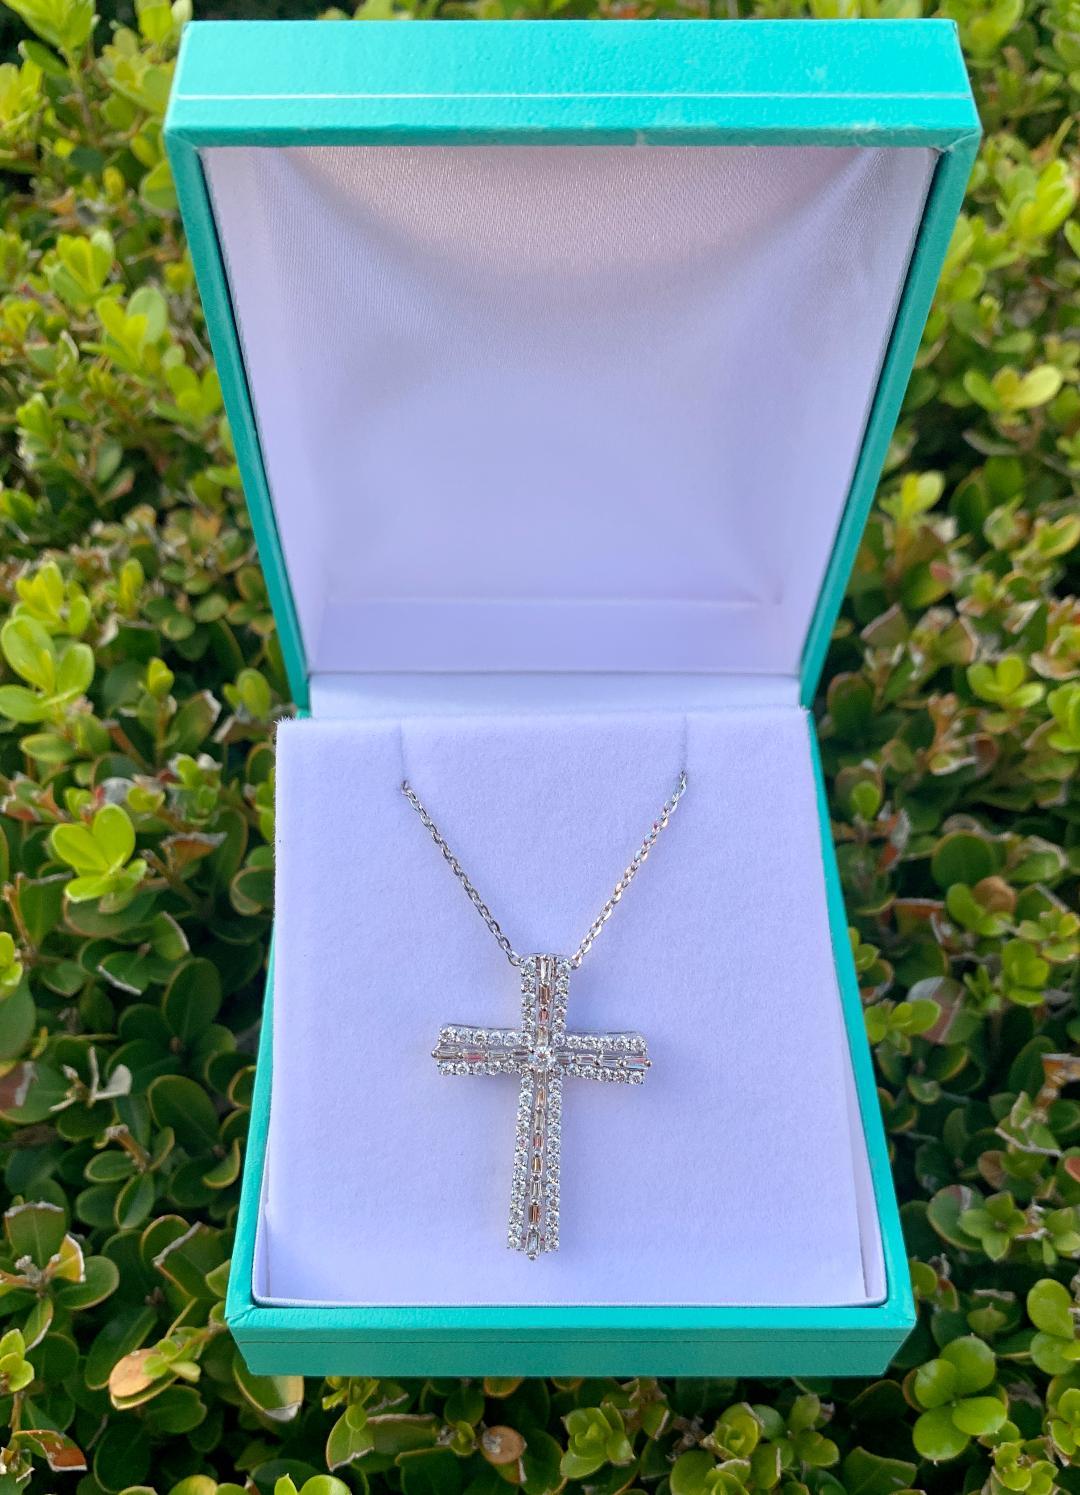 Heavenly 1.25 Carat Diamond Cross Pendant in 18K White Gold on White Gold Chain 1